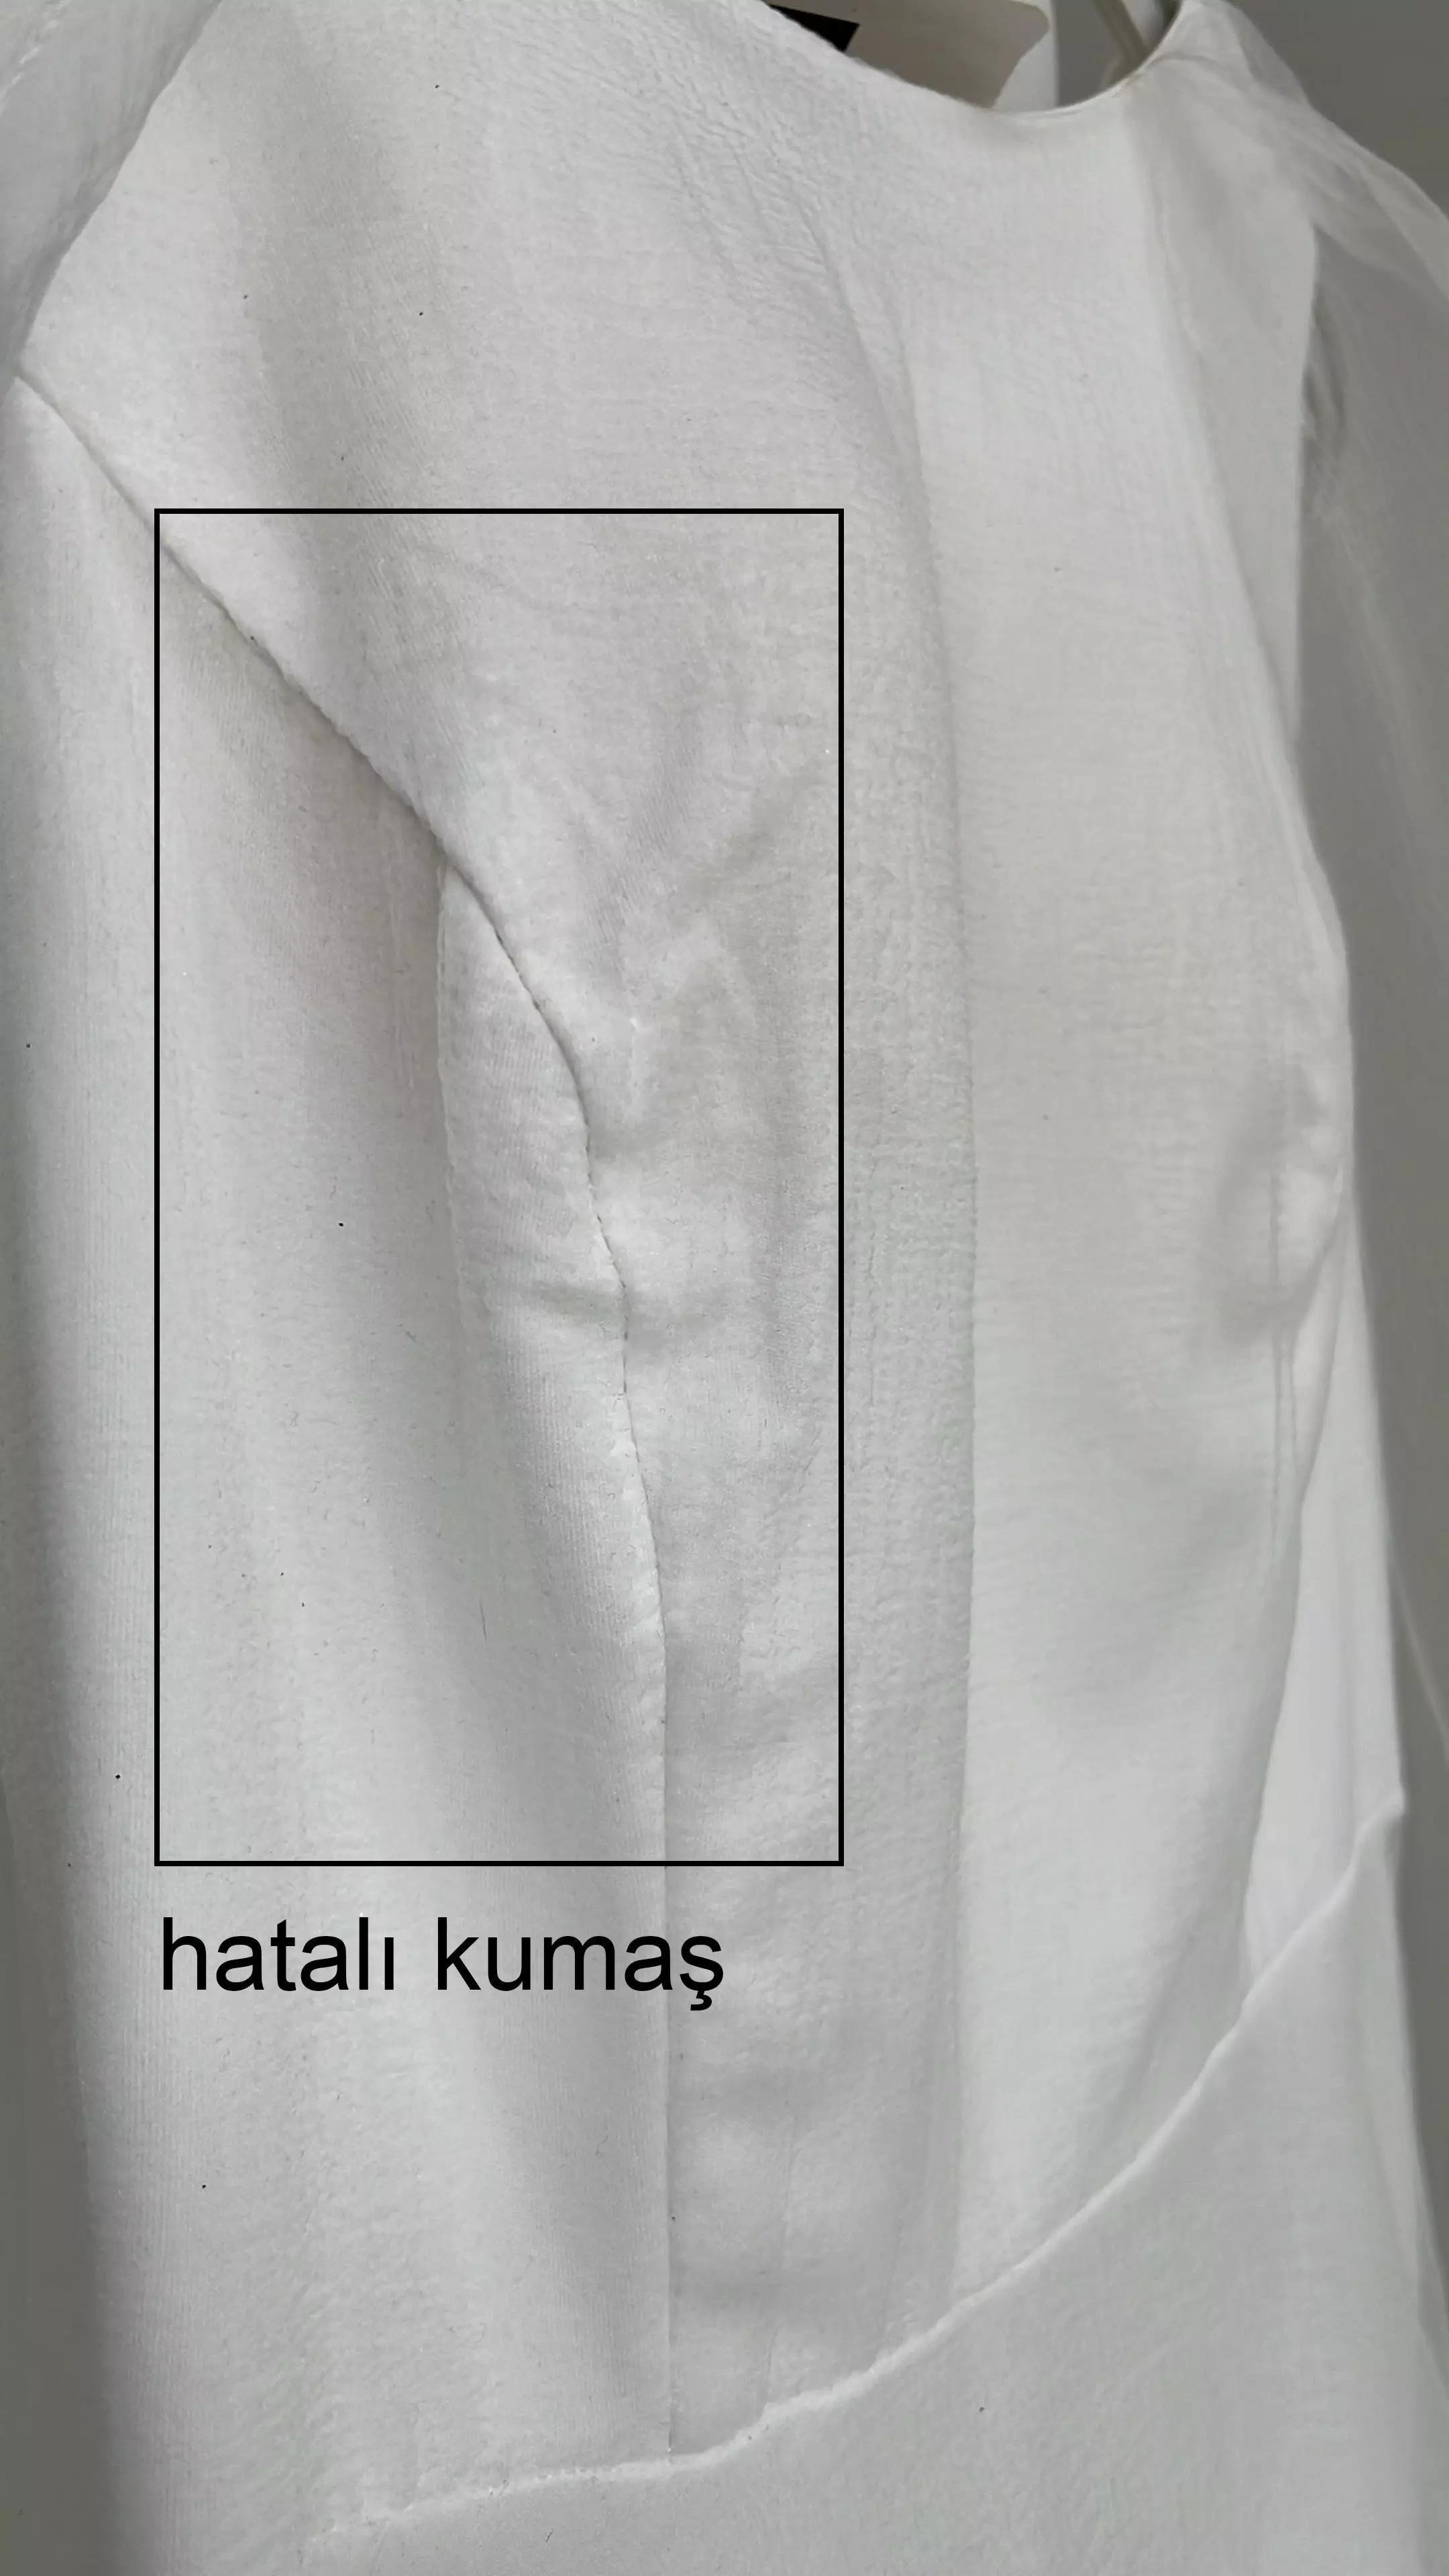 White tulle long sleeve maxi dress